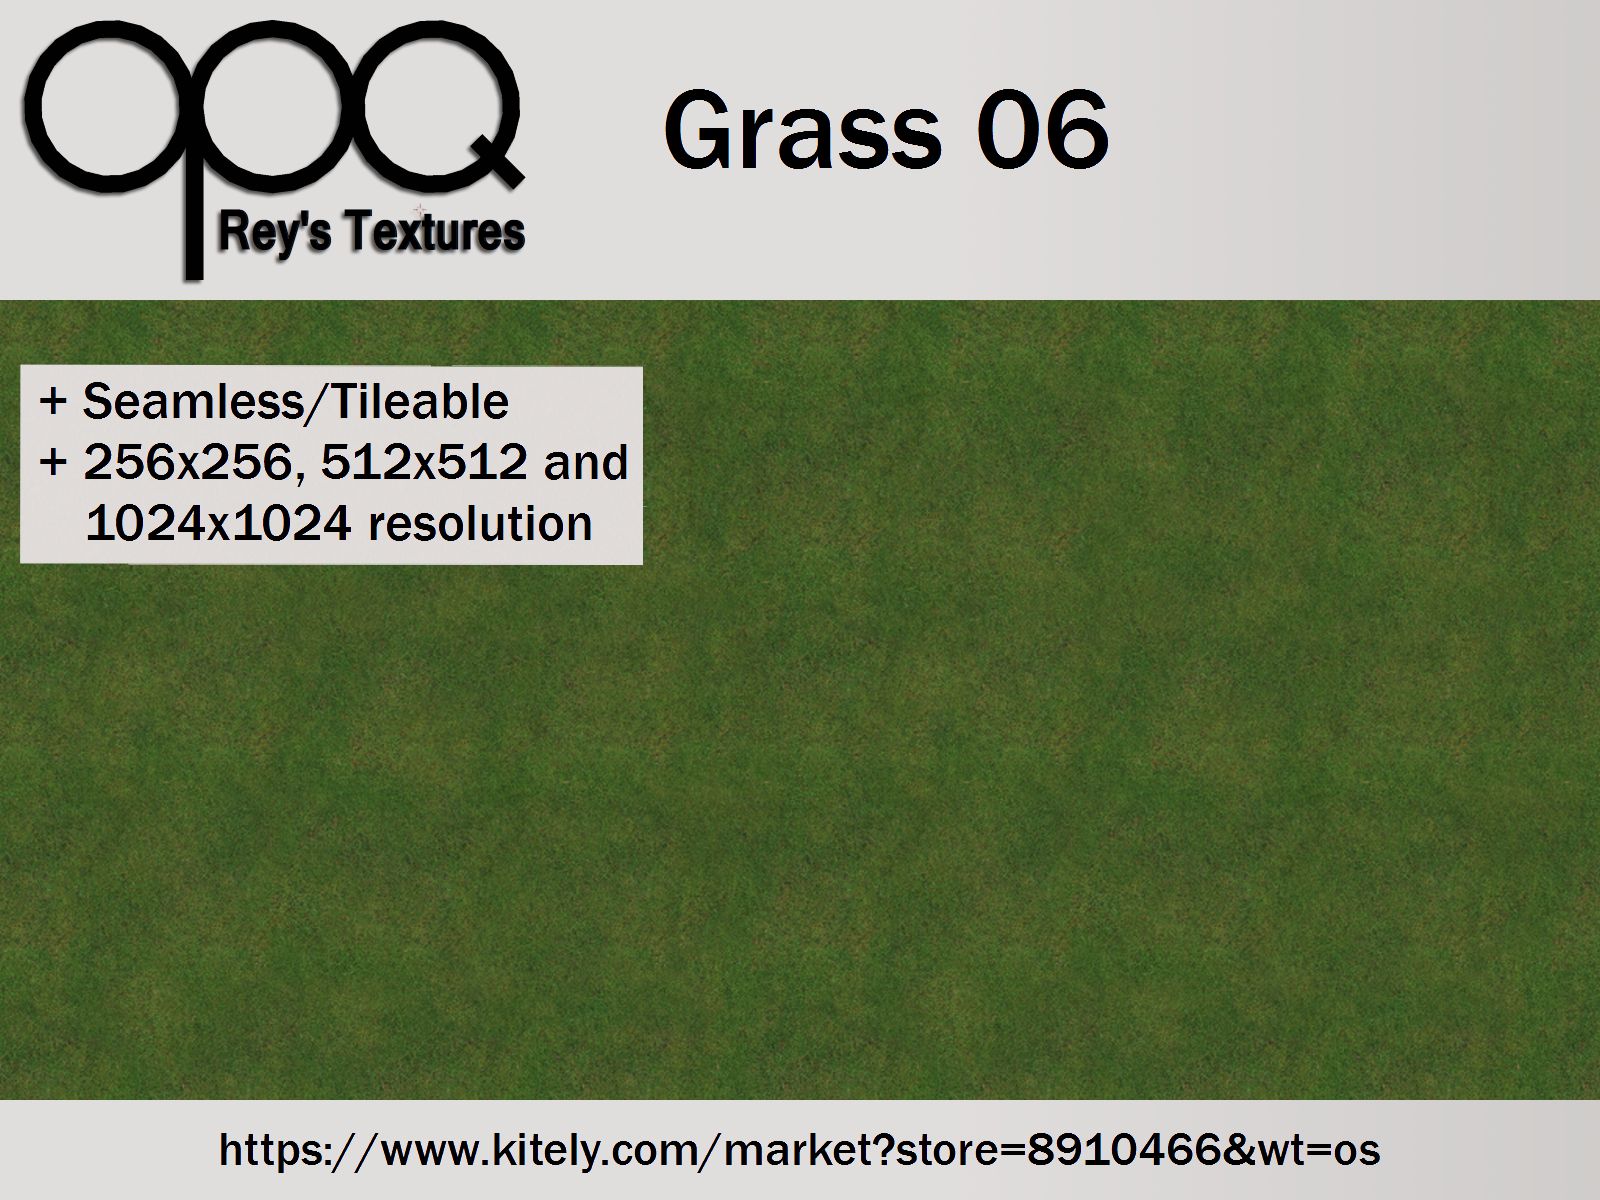 Rey's Grass 06 Poster Kitely.jpg